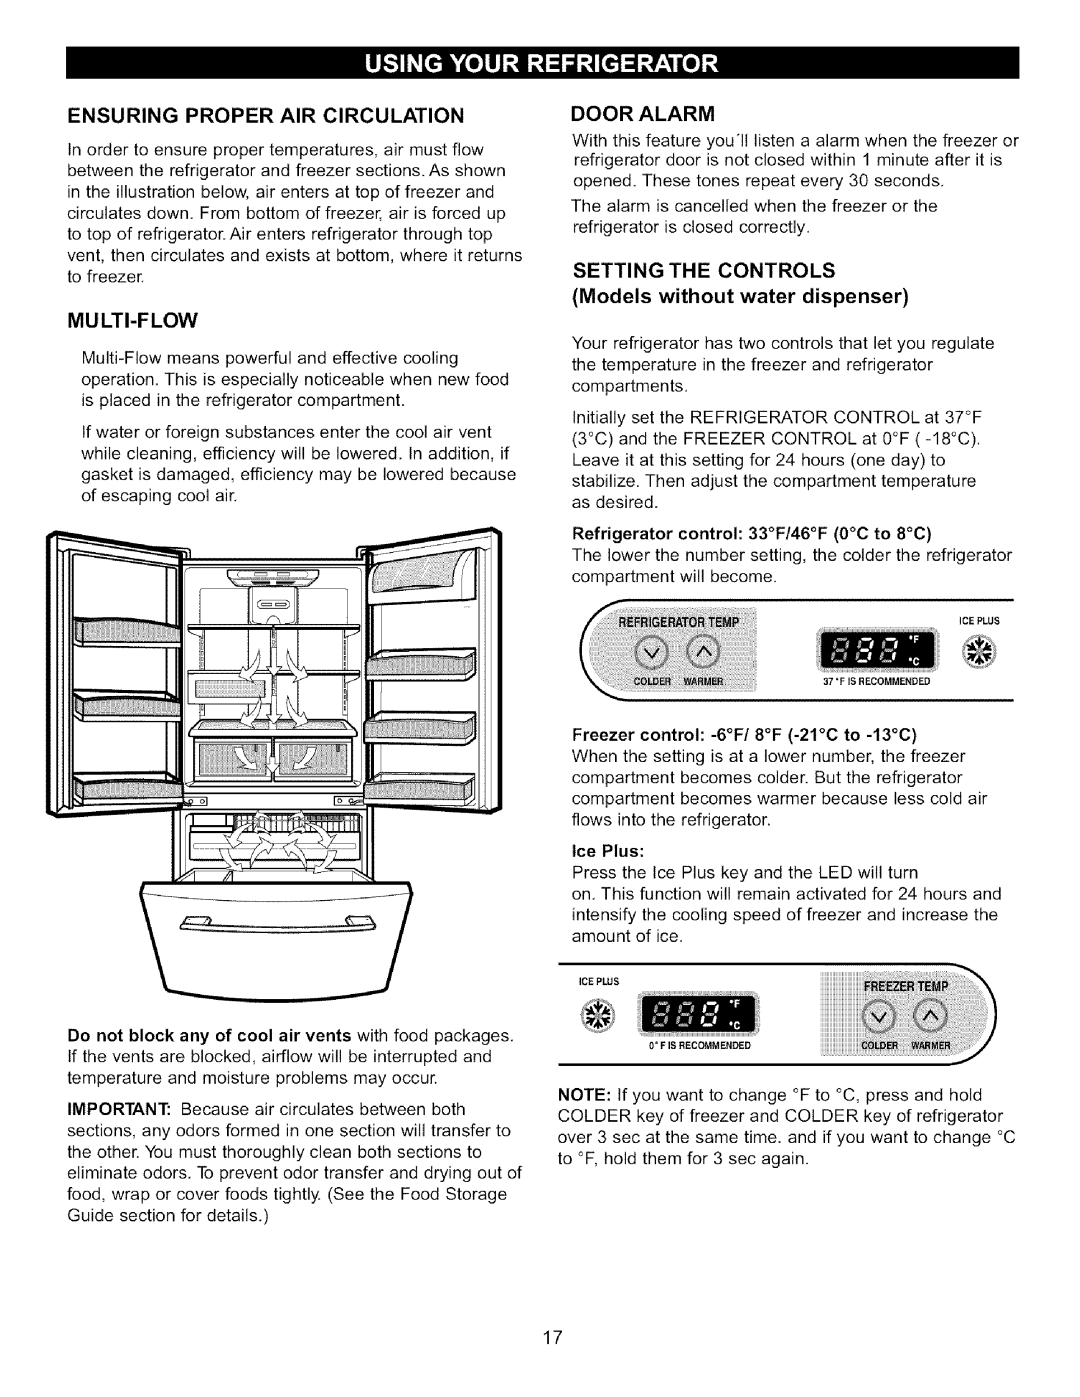 LG Electronics LFC22760 manual Ensuring Proper Air Circulation, Multi-Flow, Door Alarm, Setting The Controls 